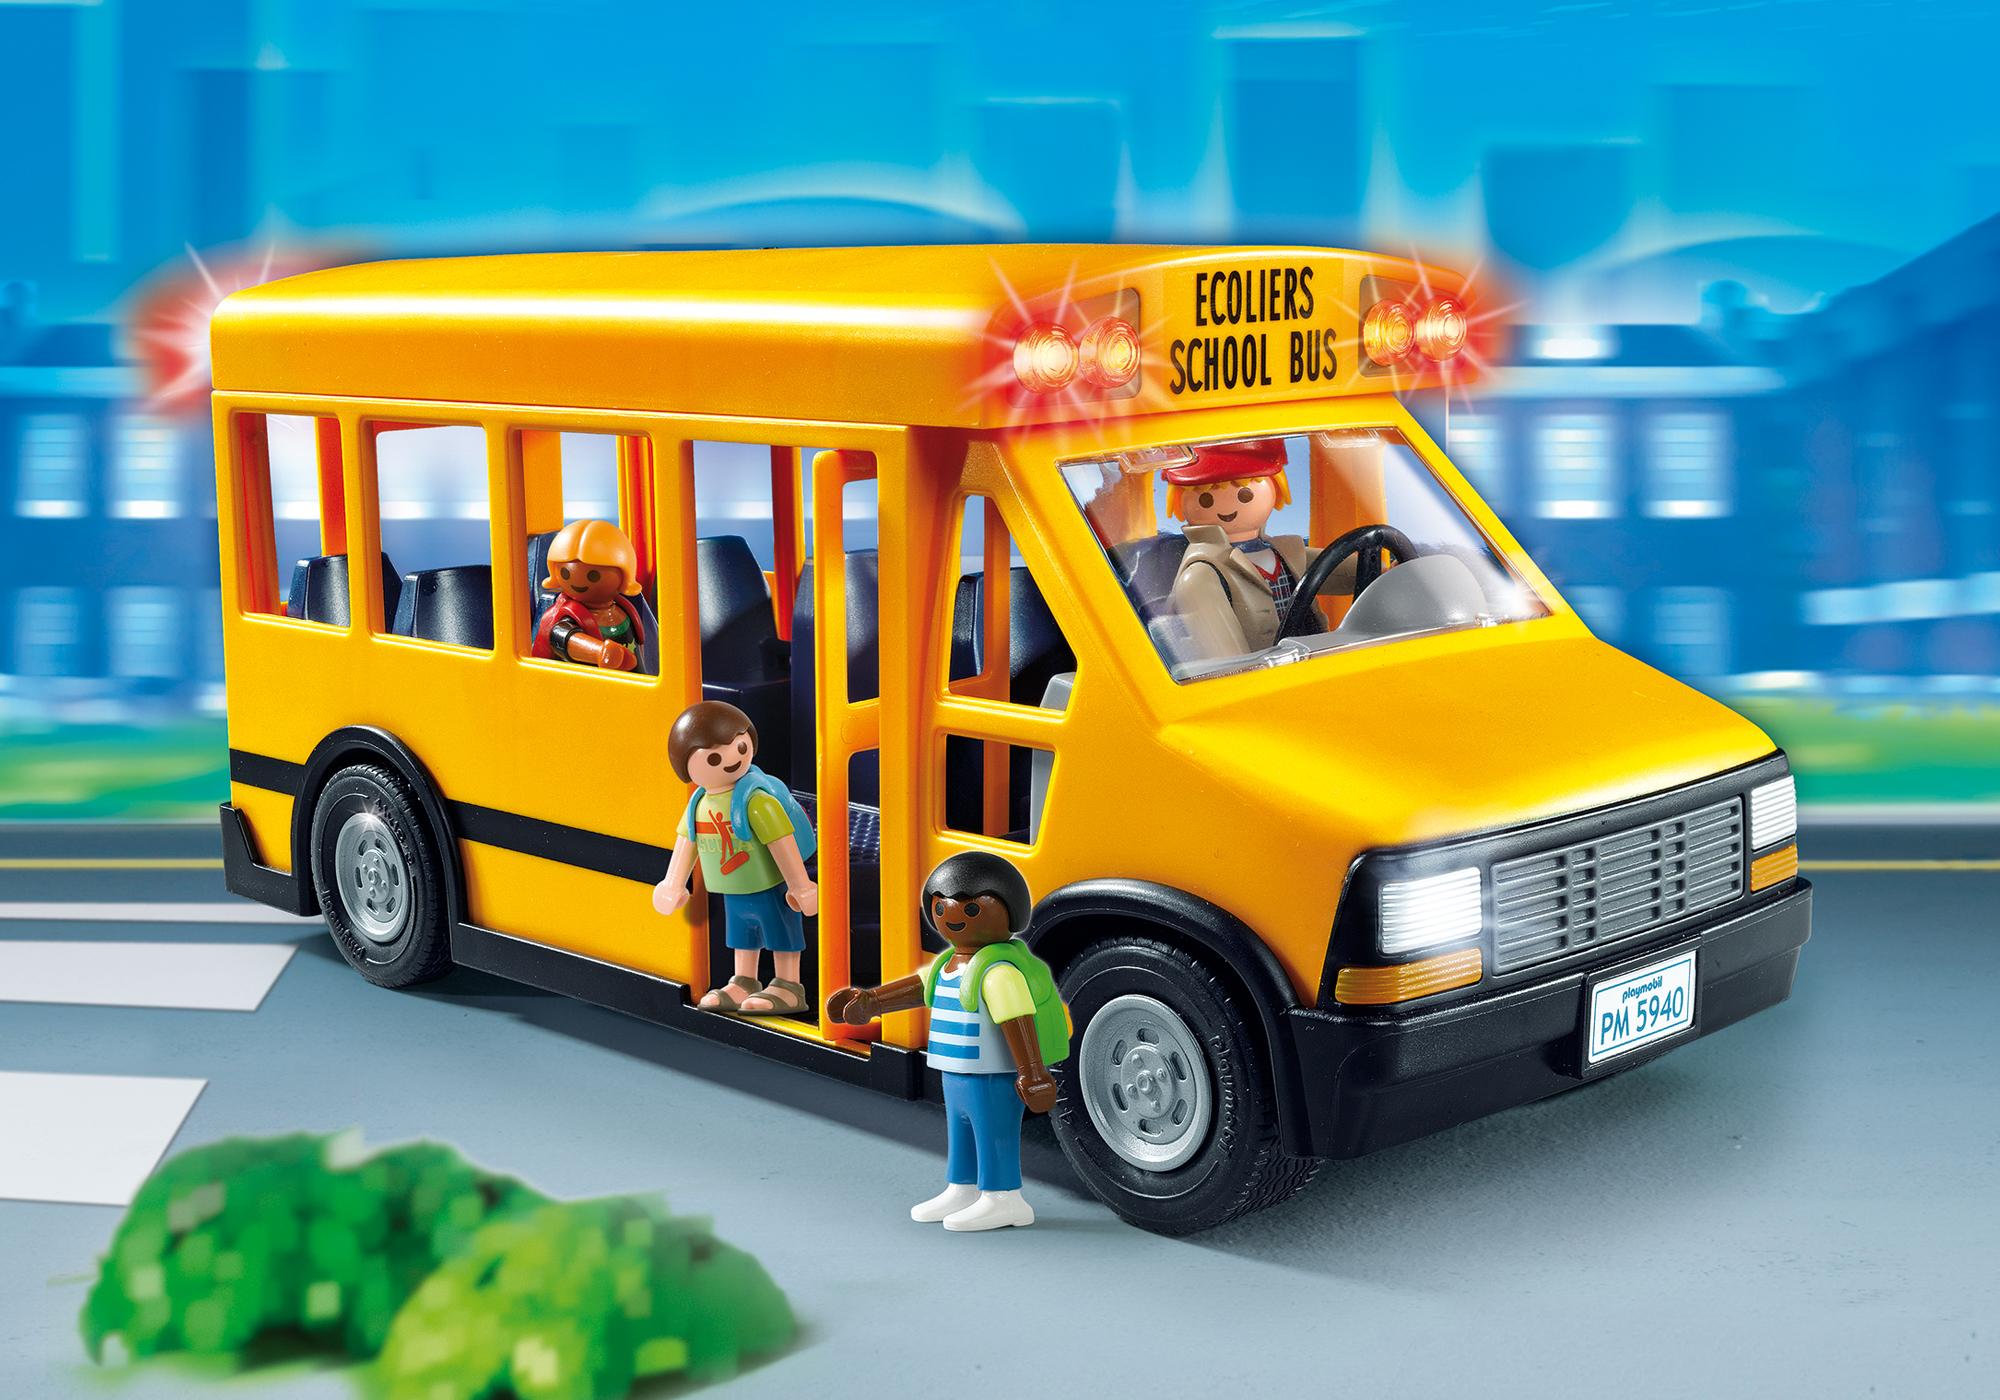 playmobil city life bus